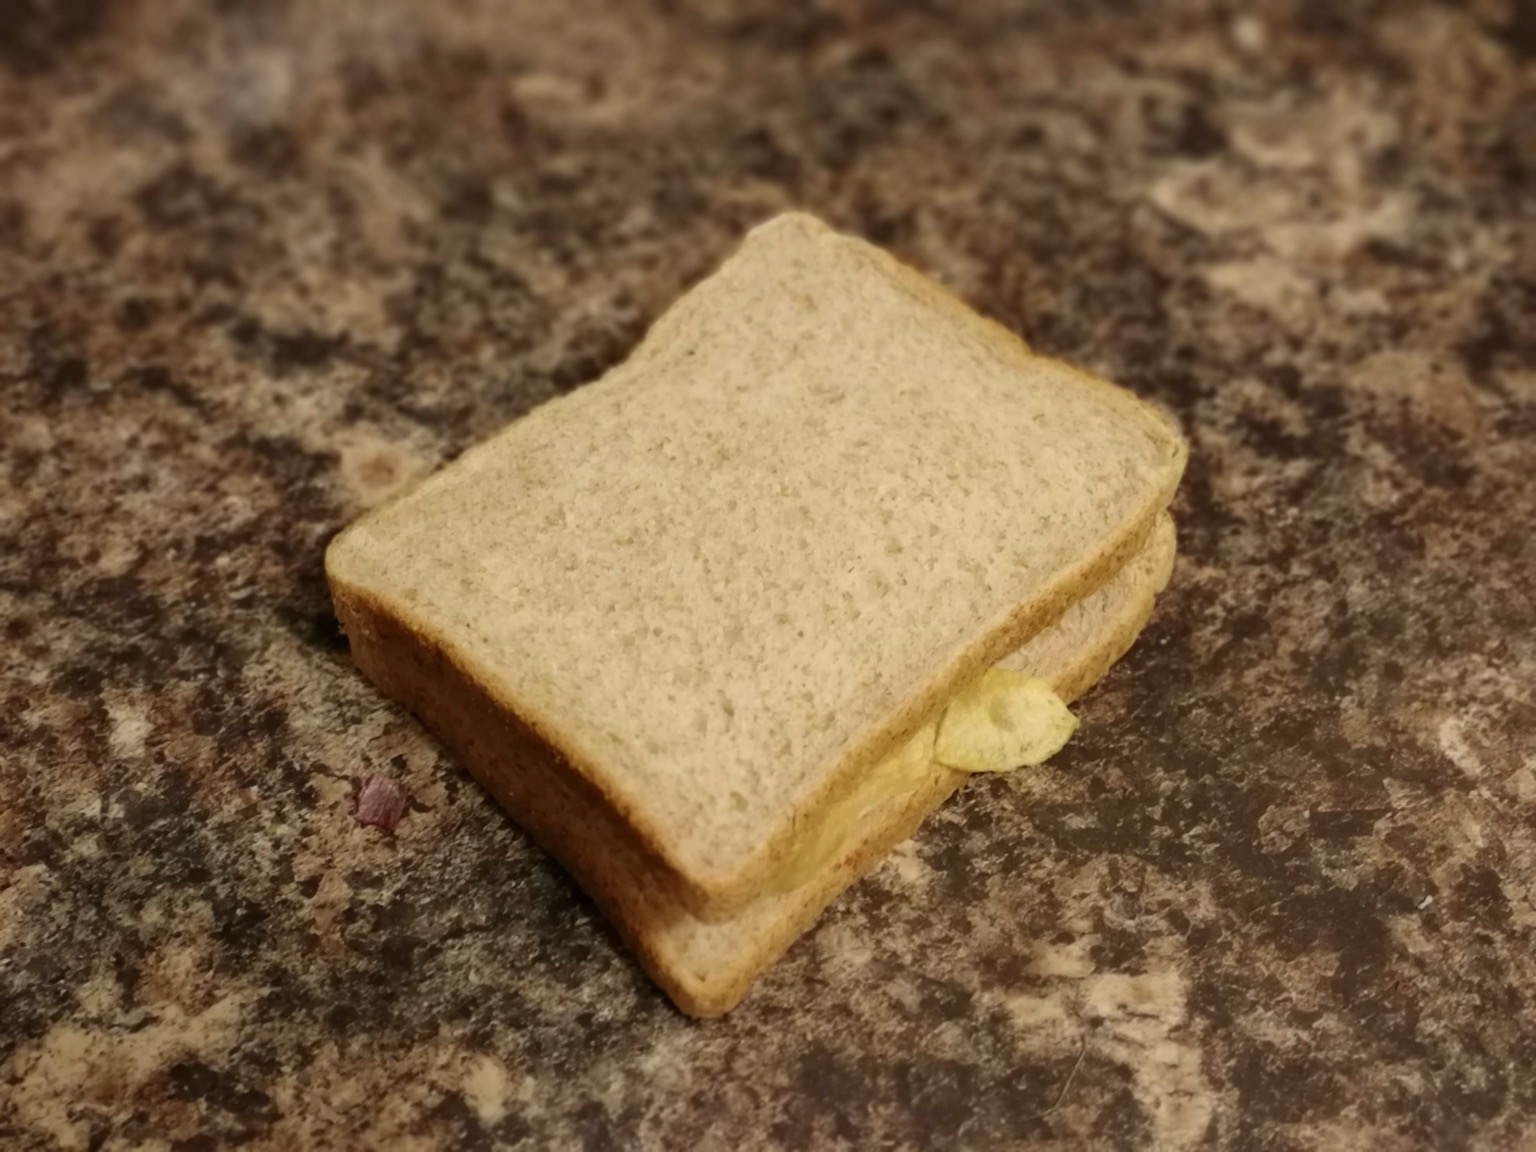 Brown crisp sandwich on a granite surface